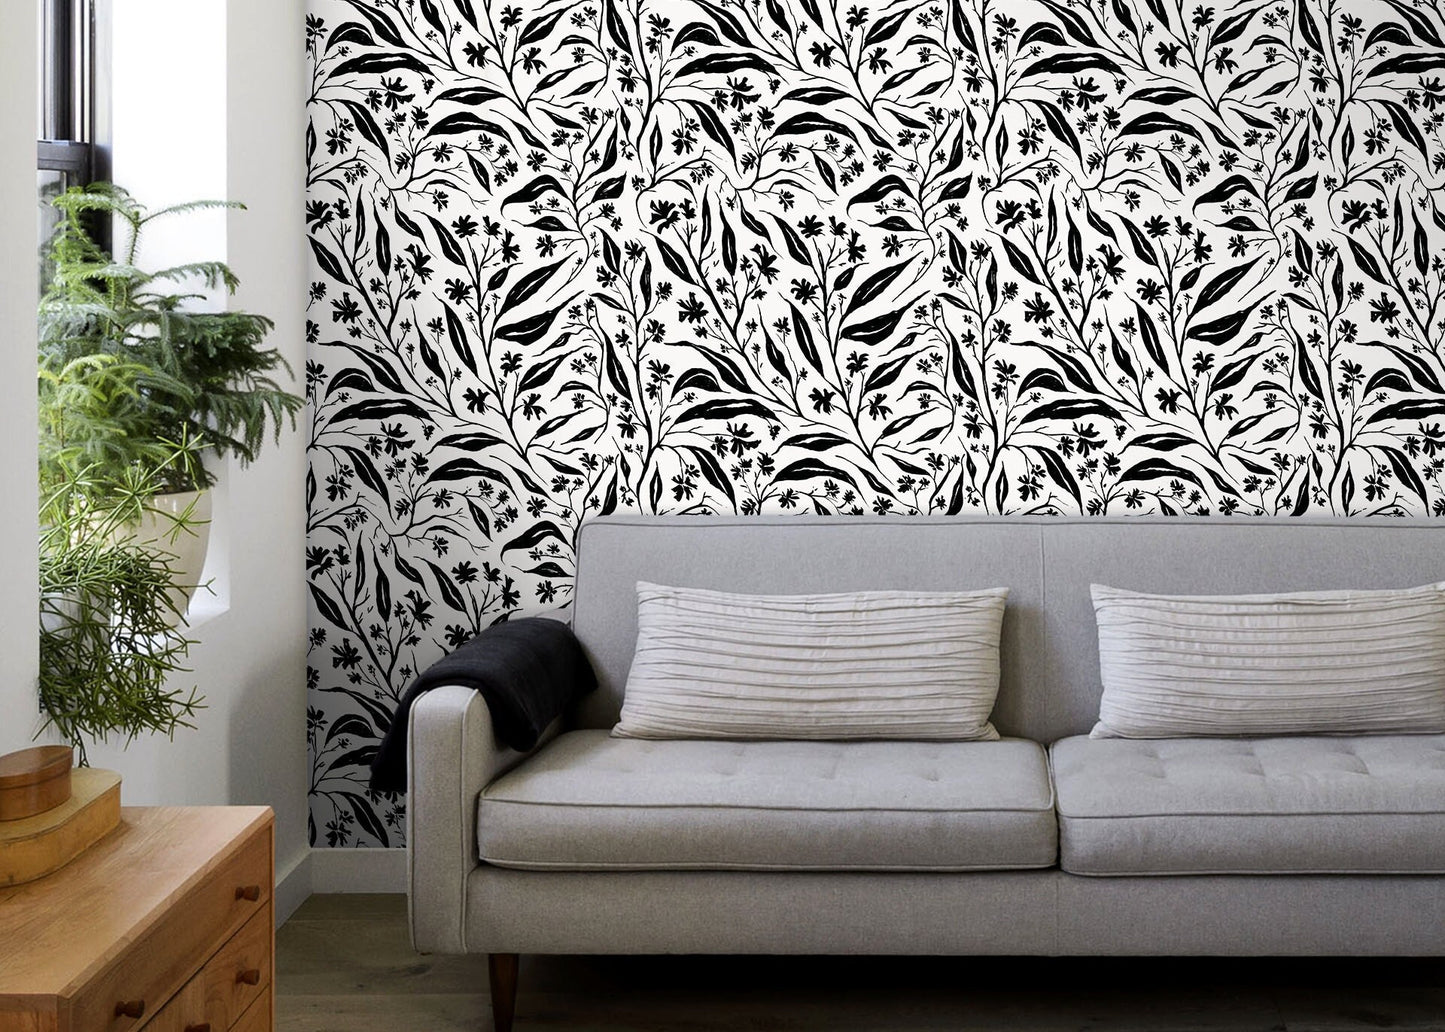 Black and Gray Tropical Wallpaper / Peel and Stick Wallpaper Removable Wallpaper Home Decor Wall Art Wall Decor Room Decor - C663